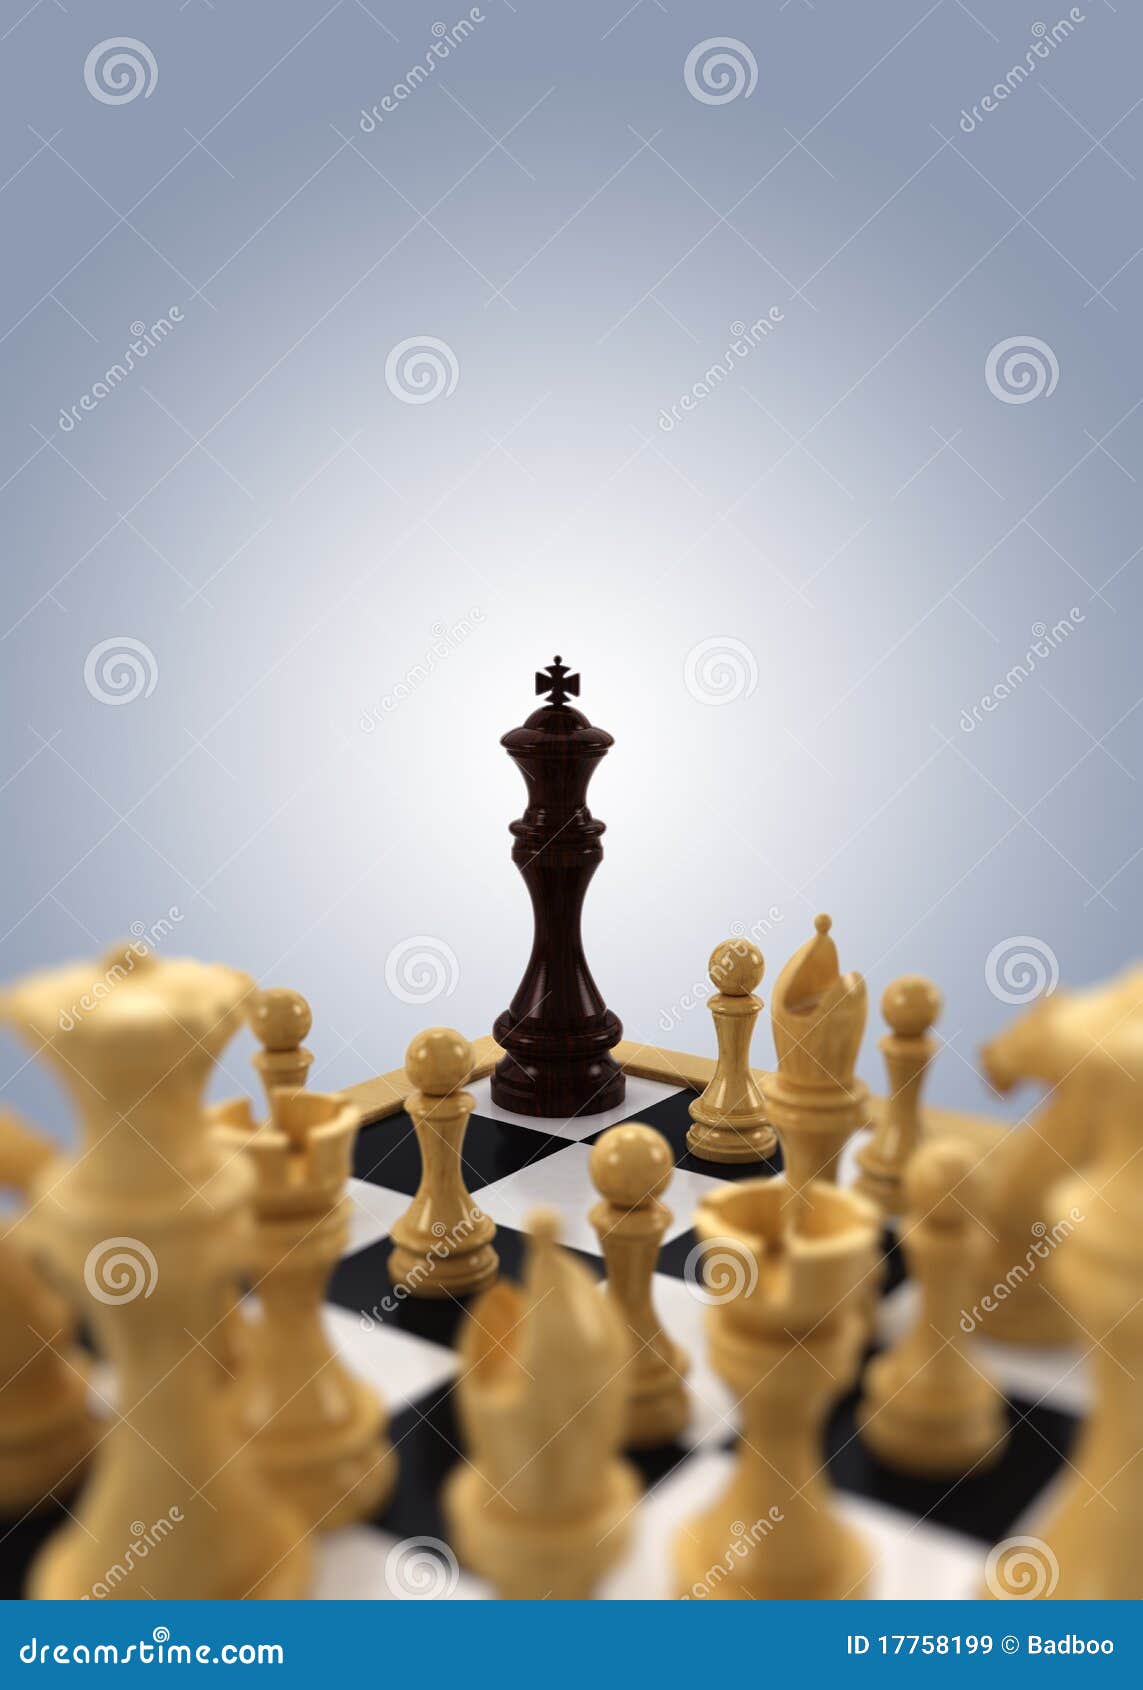 Chess king Cornered stock image. Image of challenge, chessman - 17758199